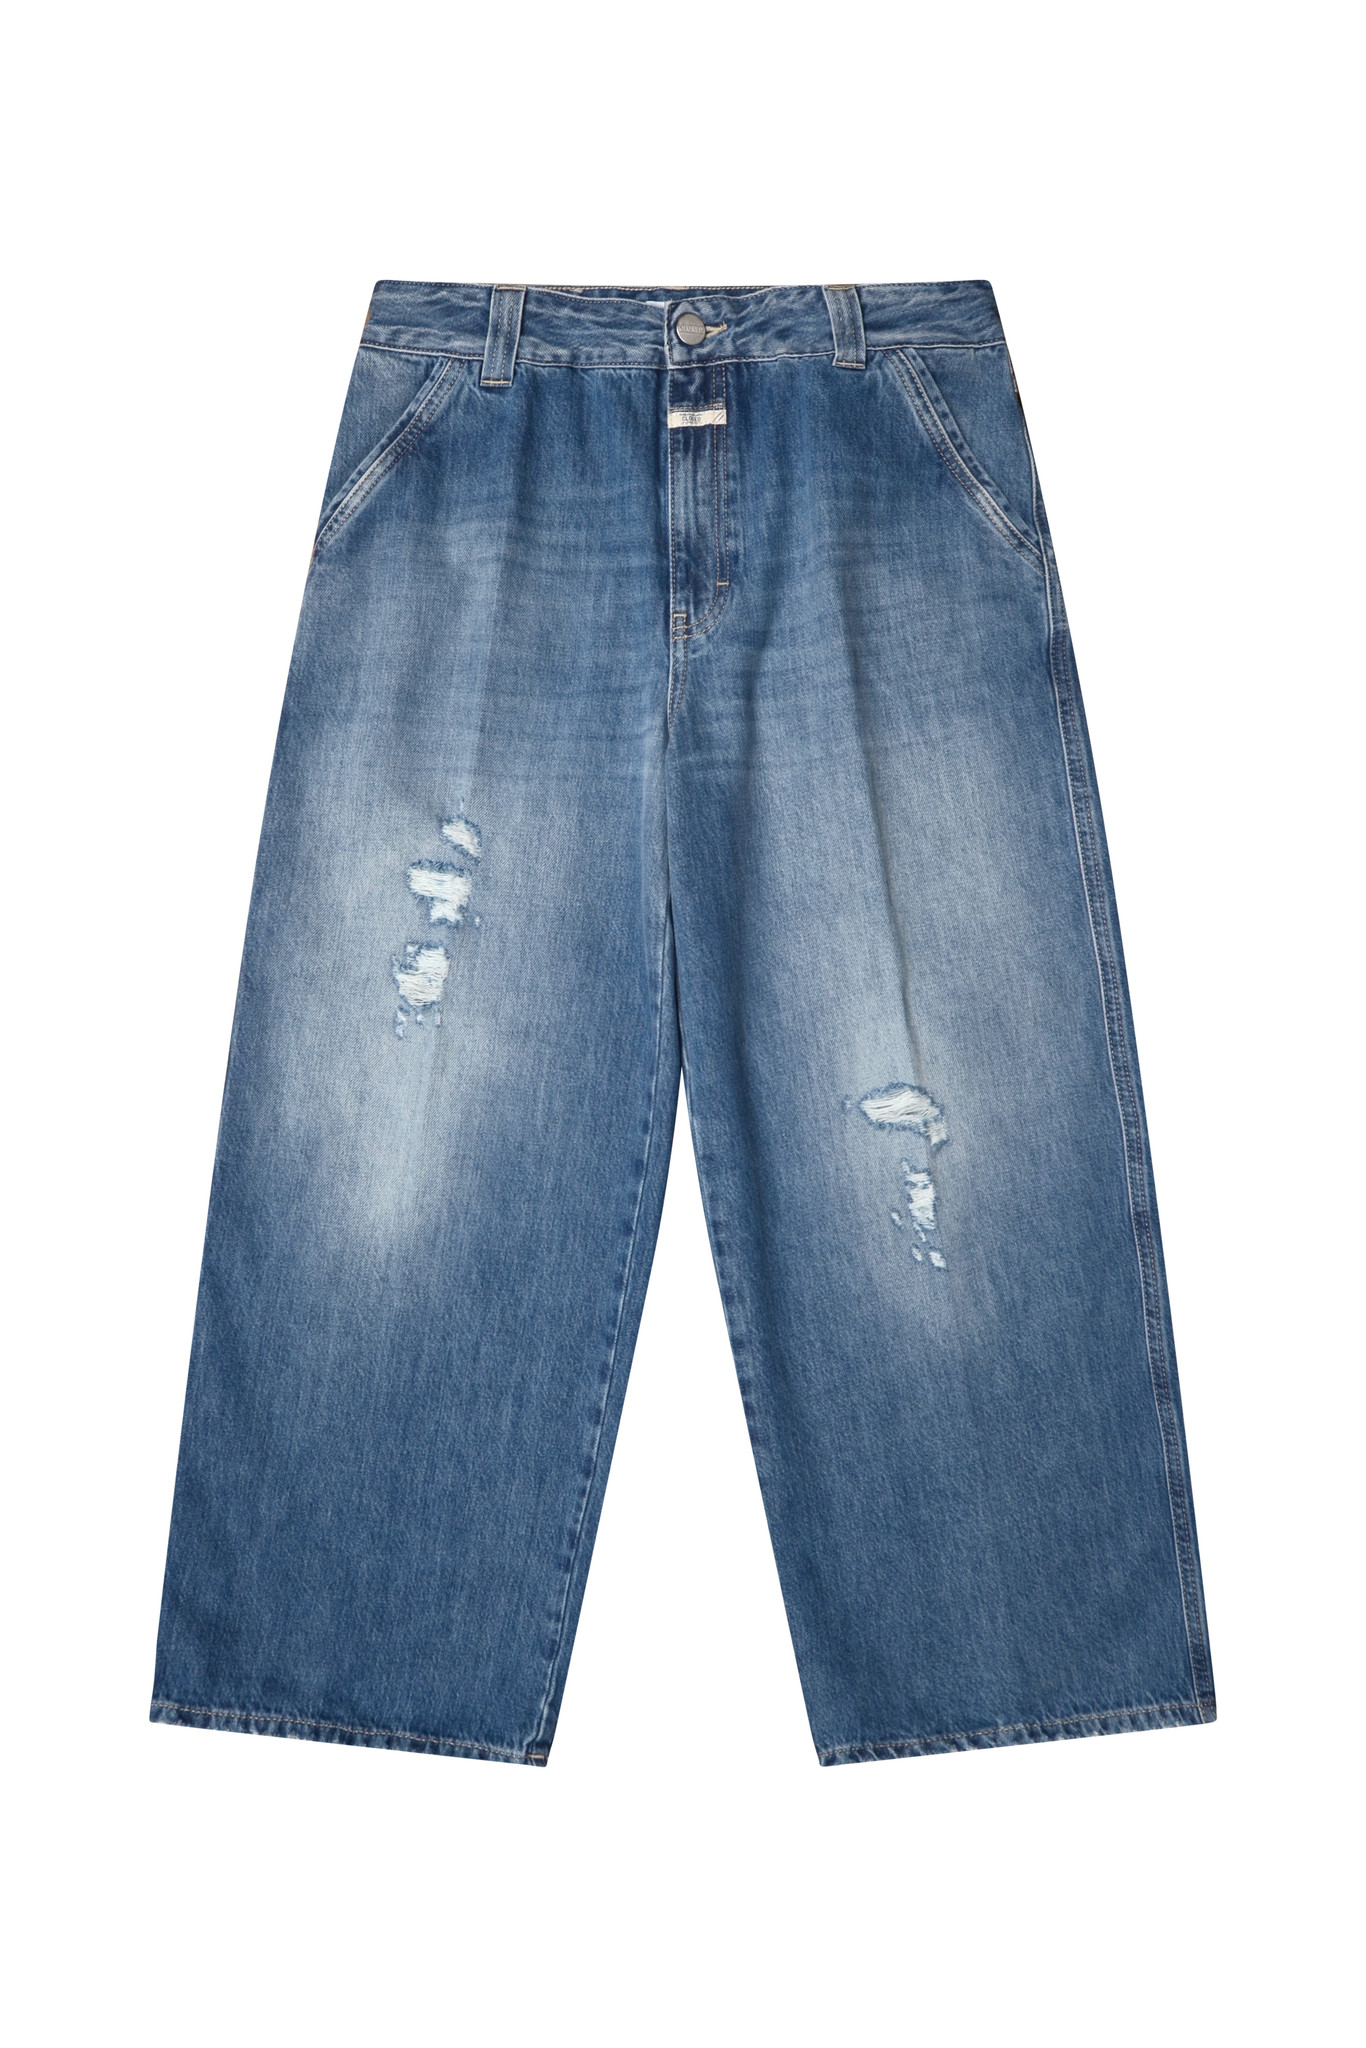 Melfort Jeans-1